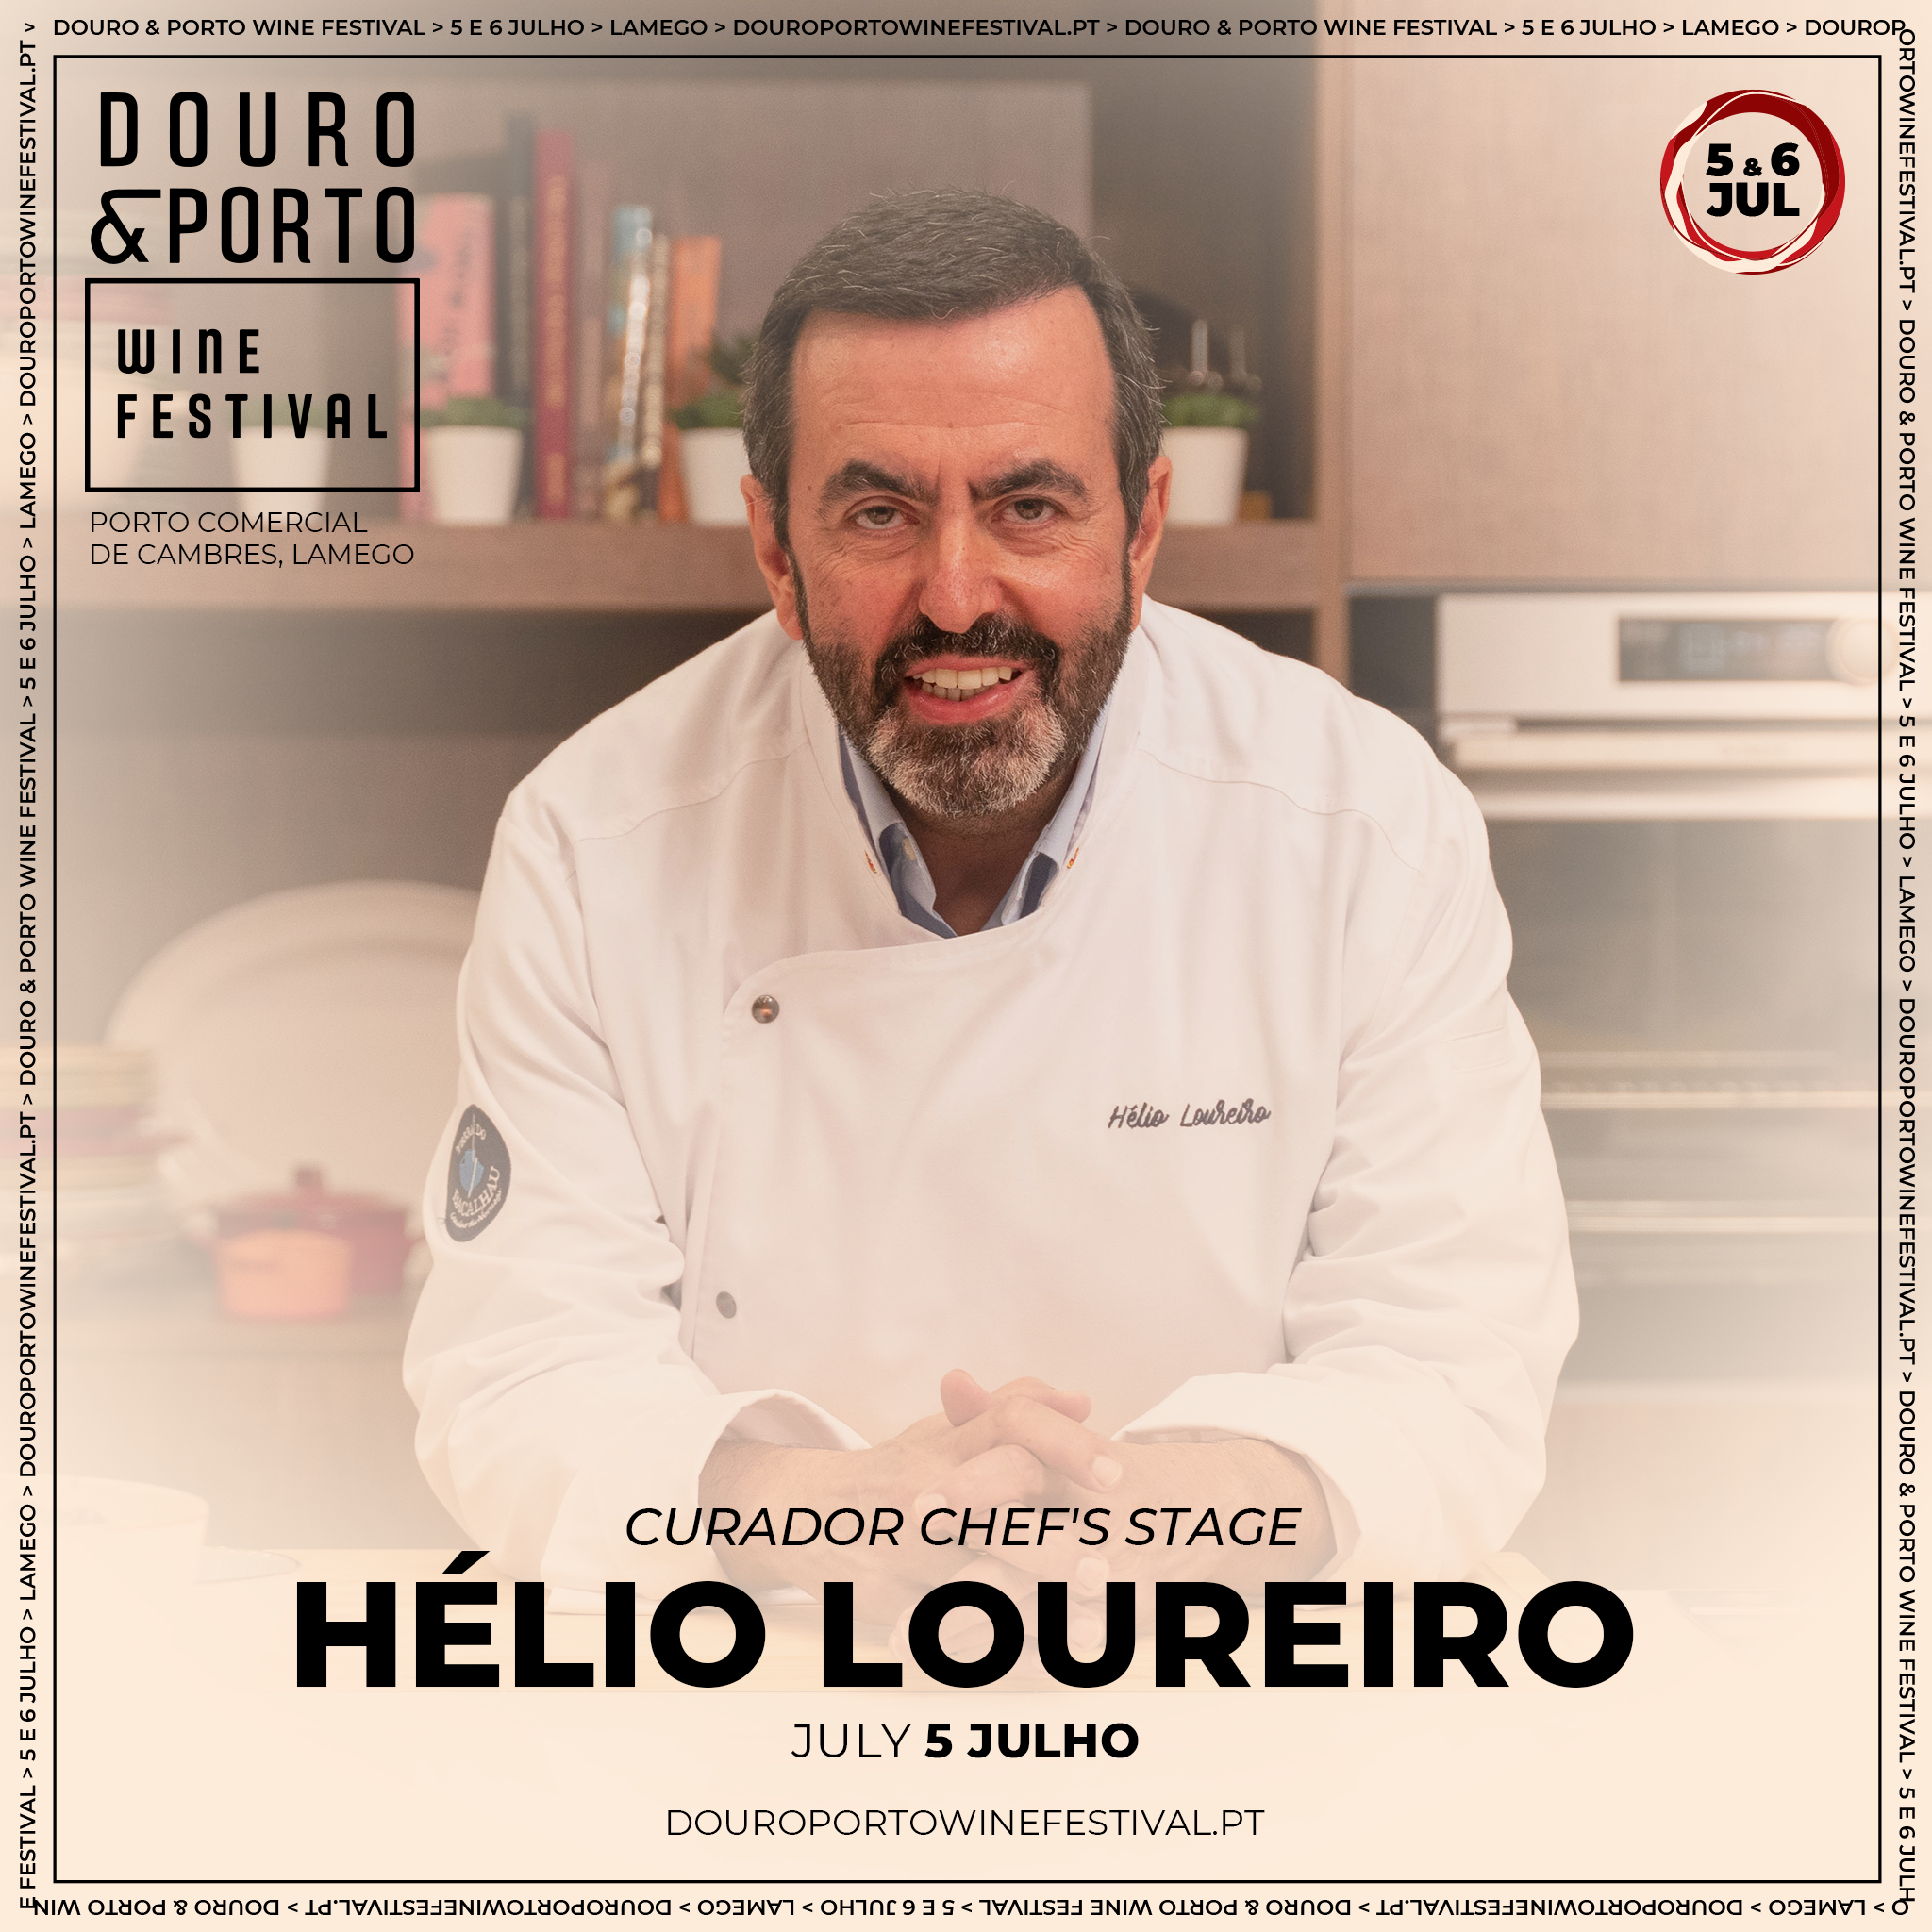 DOURO PORTO WINE FESTIVAL - CHEFF HELIO LOUREIRO